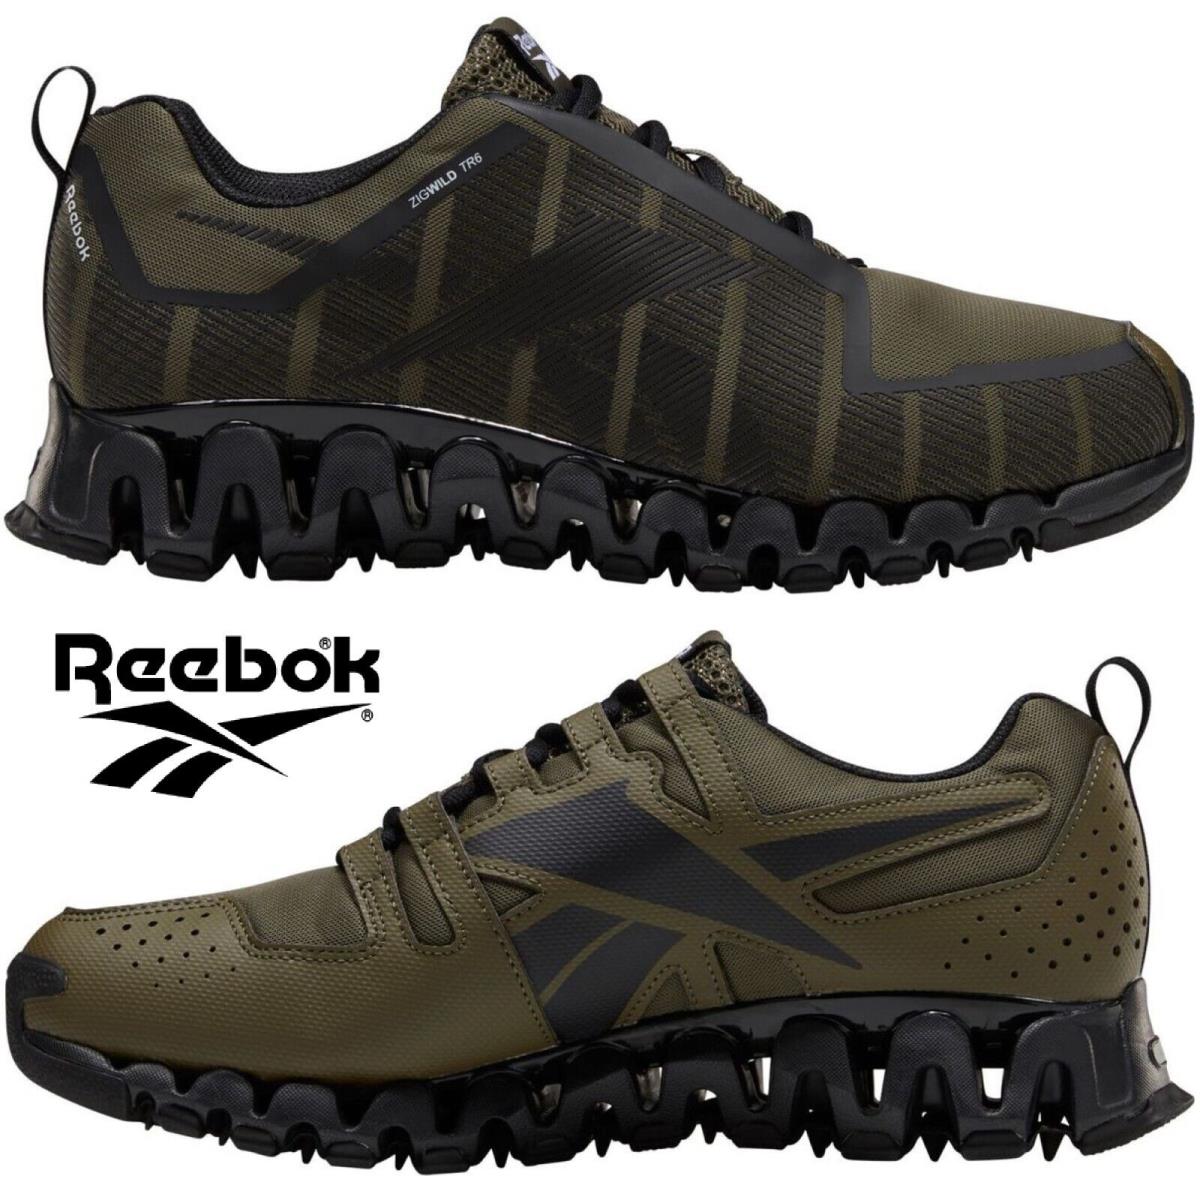 Reebok Zigwild Trail 6 Running Shoes Men`s Sneakers Lightweight Hiking Walking